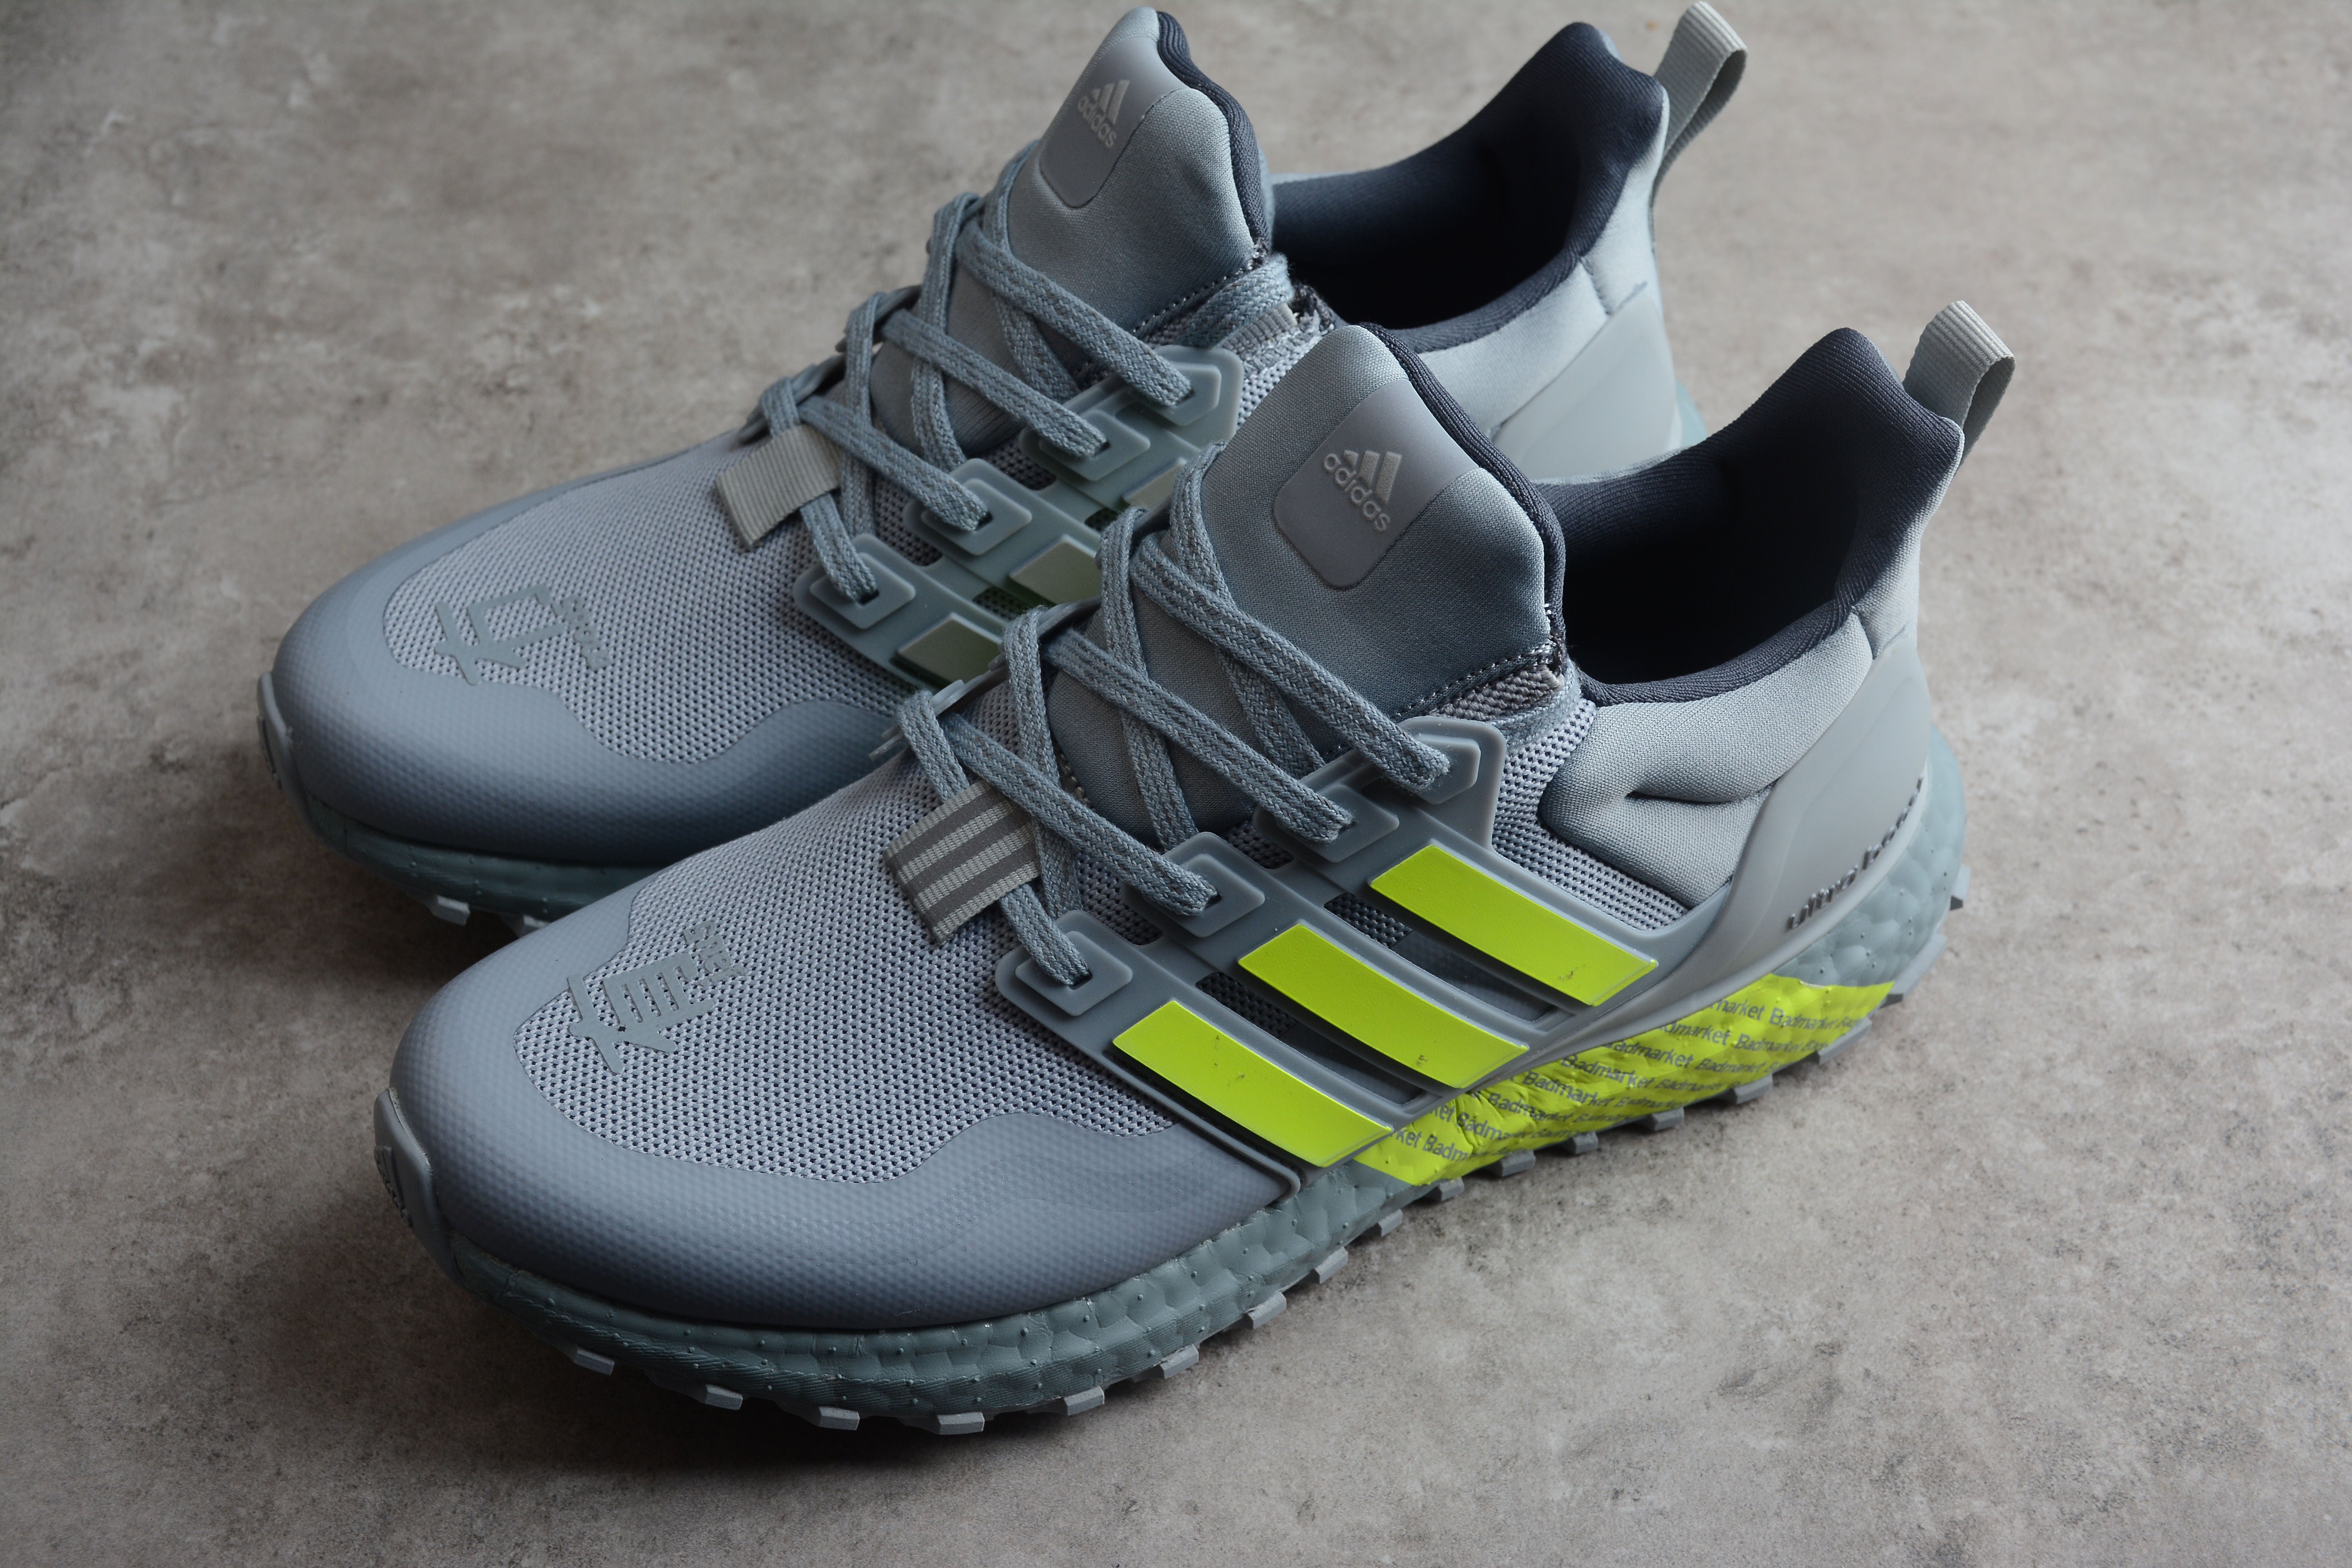 Adidas ultraboost grey/yellow shoes